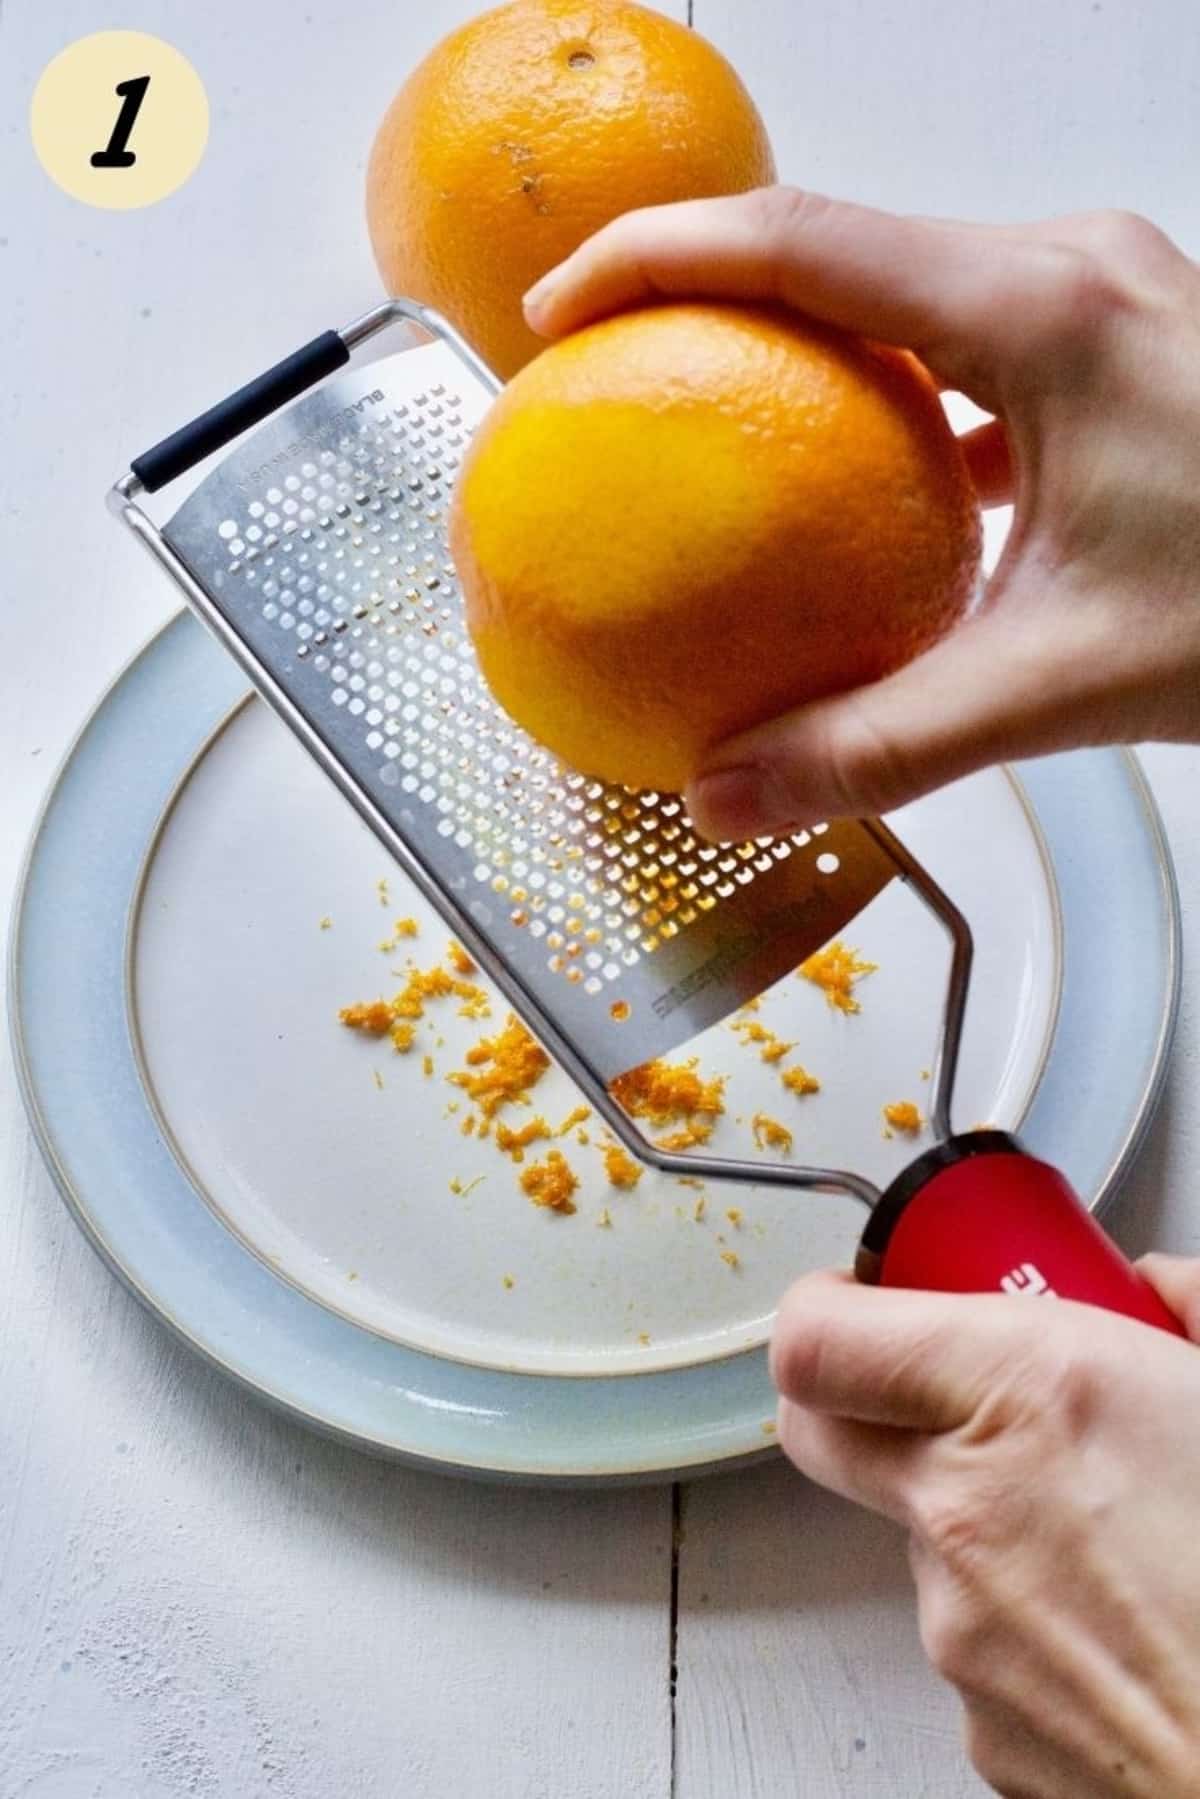 Grating an orange onto a plate.